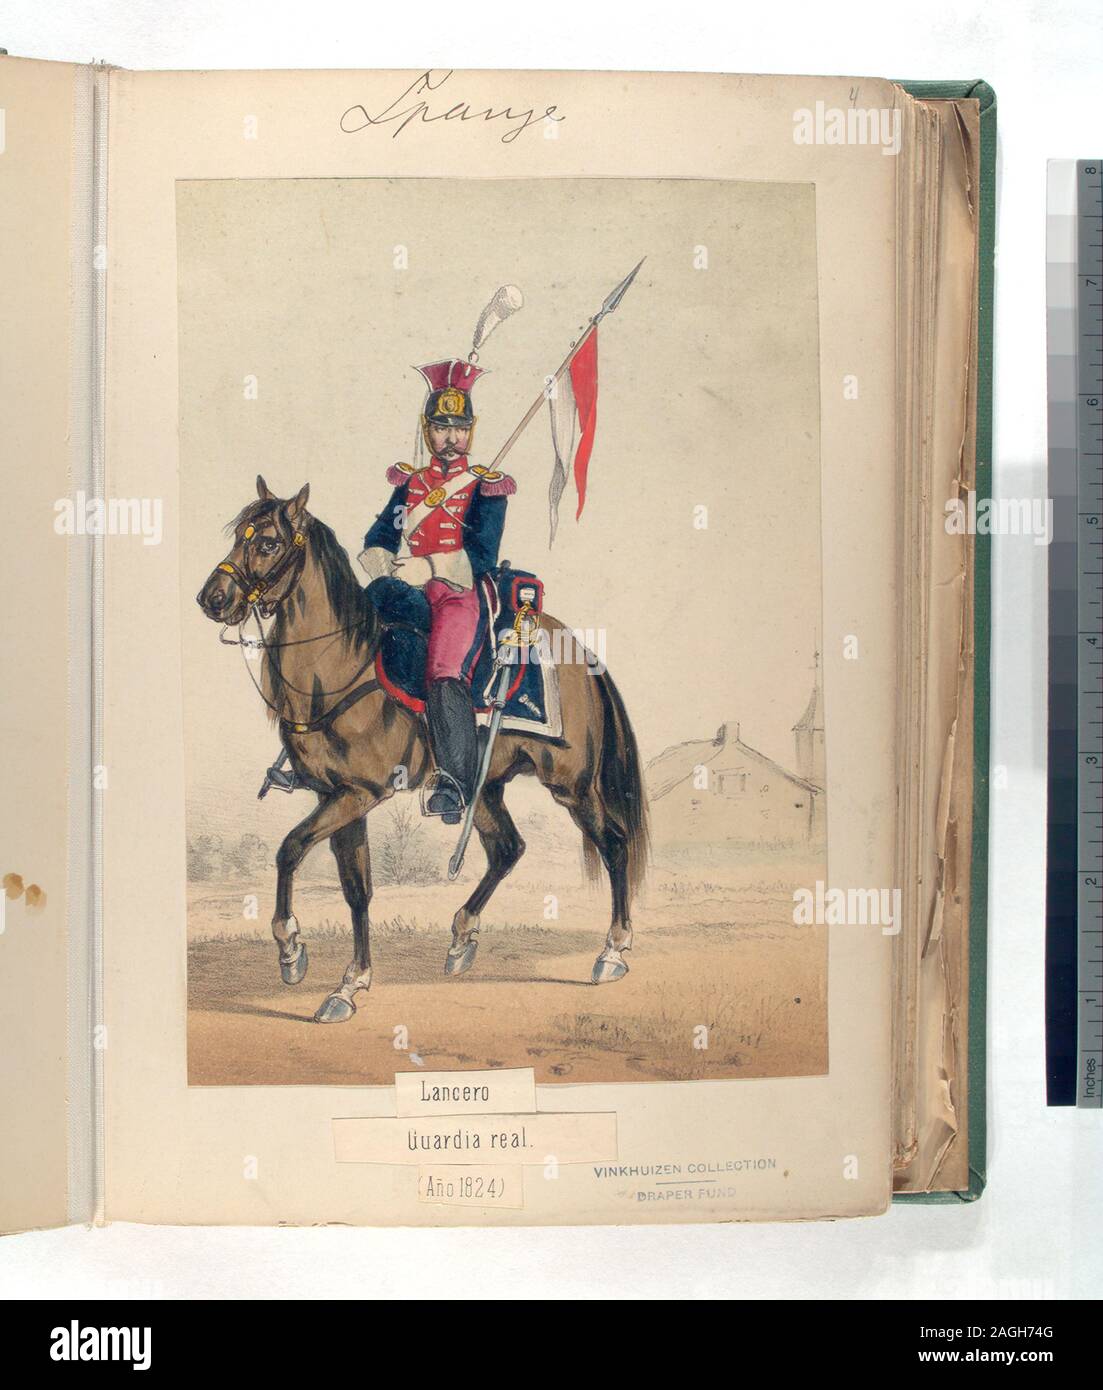 Fondo de la trilladora; Lancero. Guardia real. 1824 Foto de stock